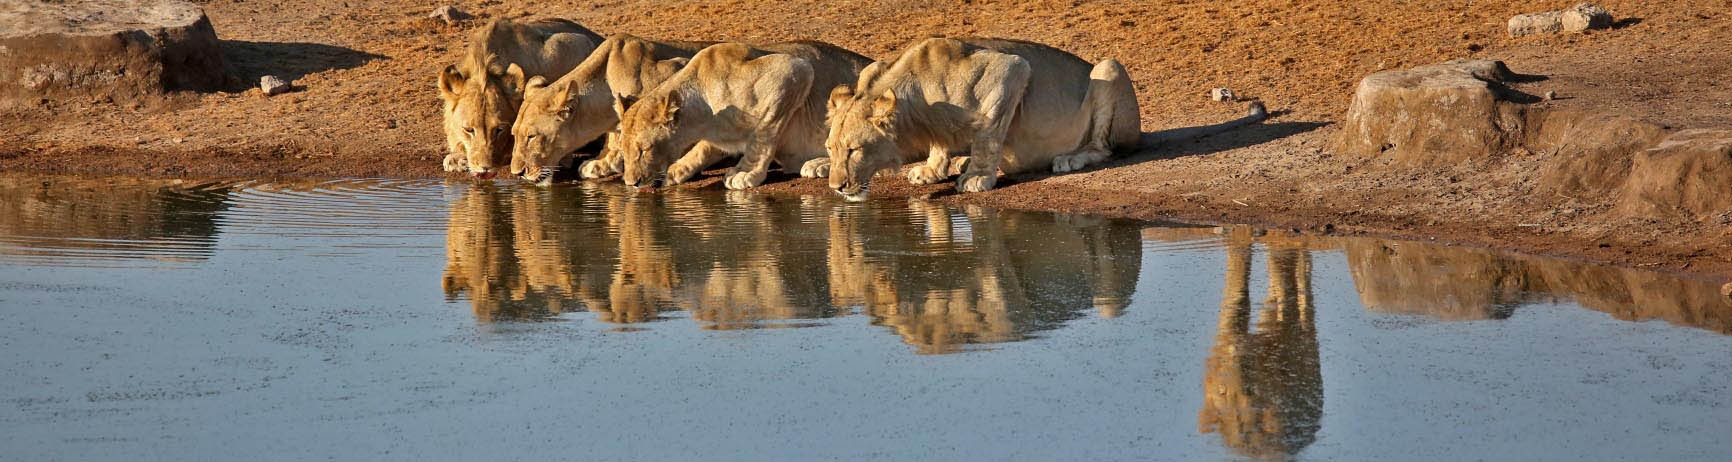 Thirsty lions in Etosha, Namibia | Your Safari